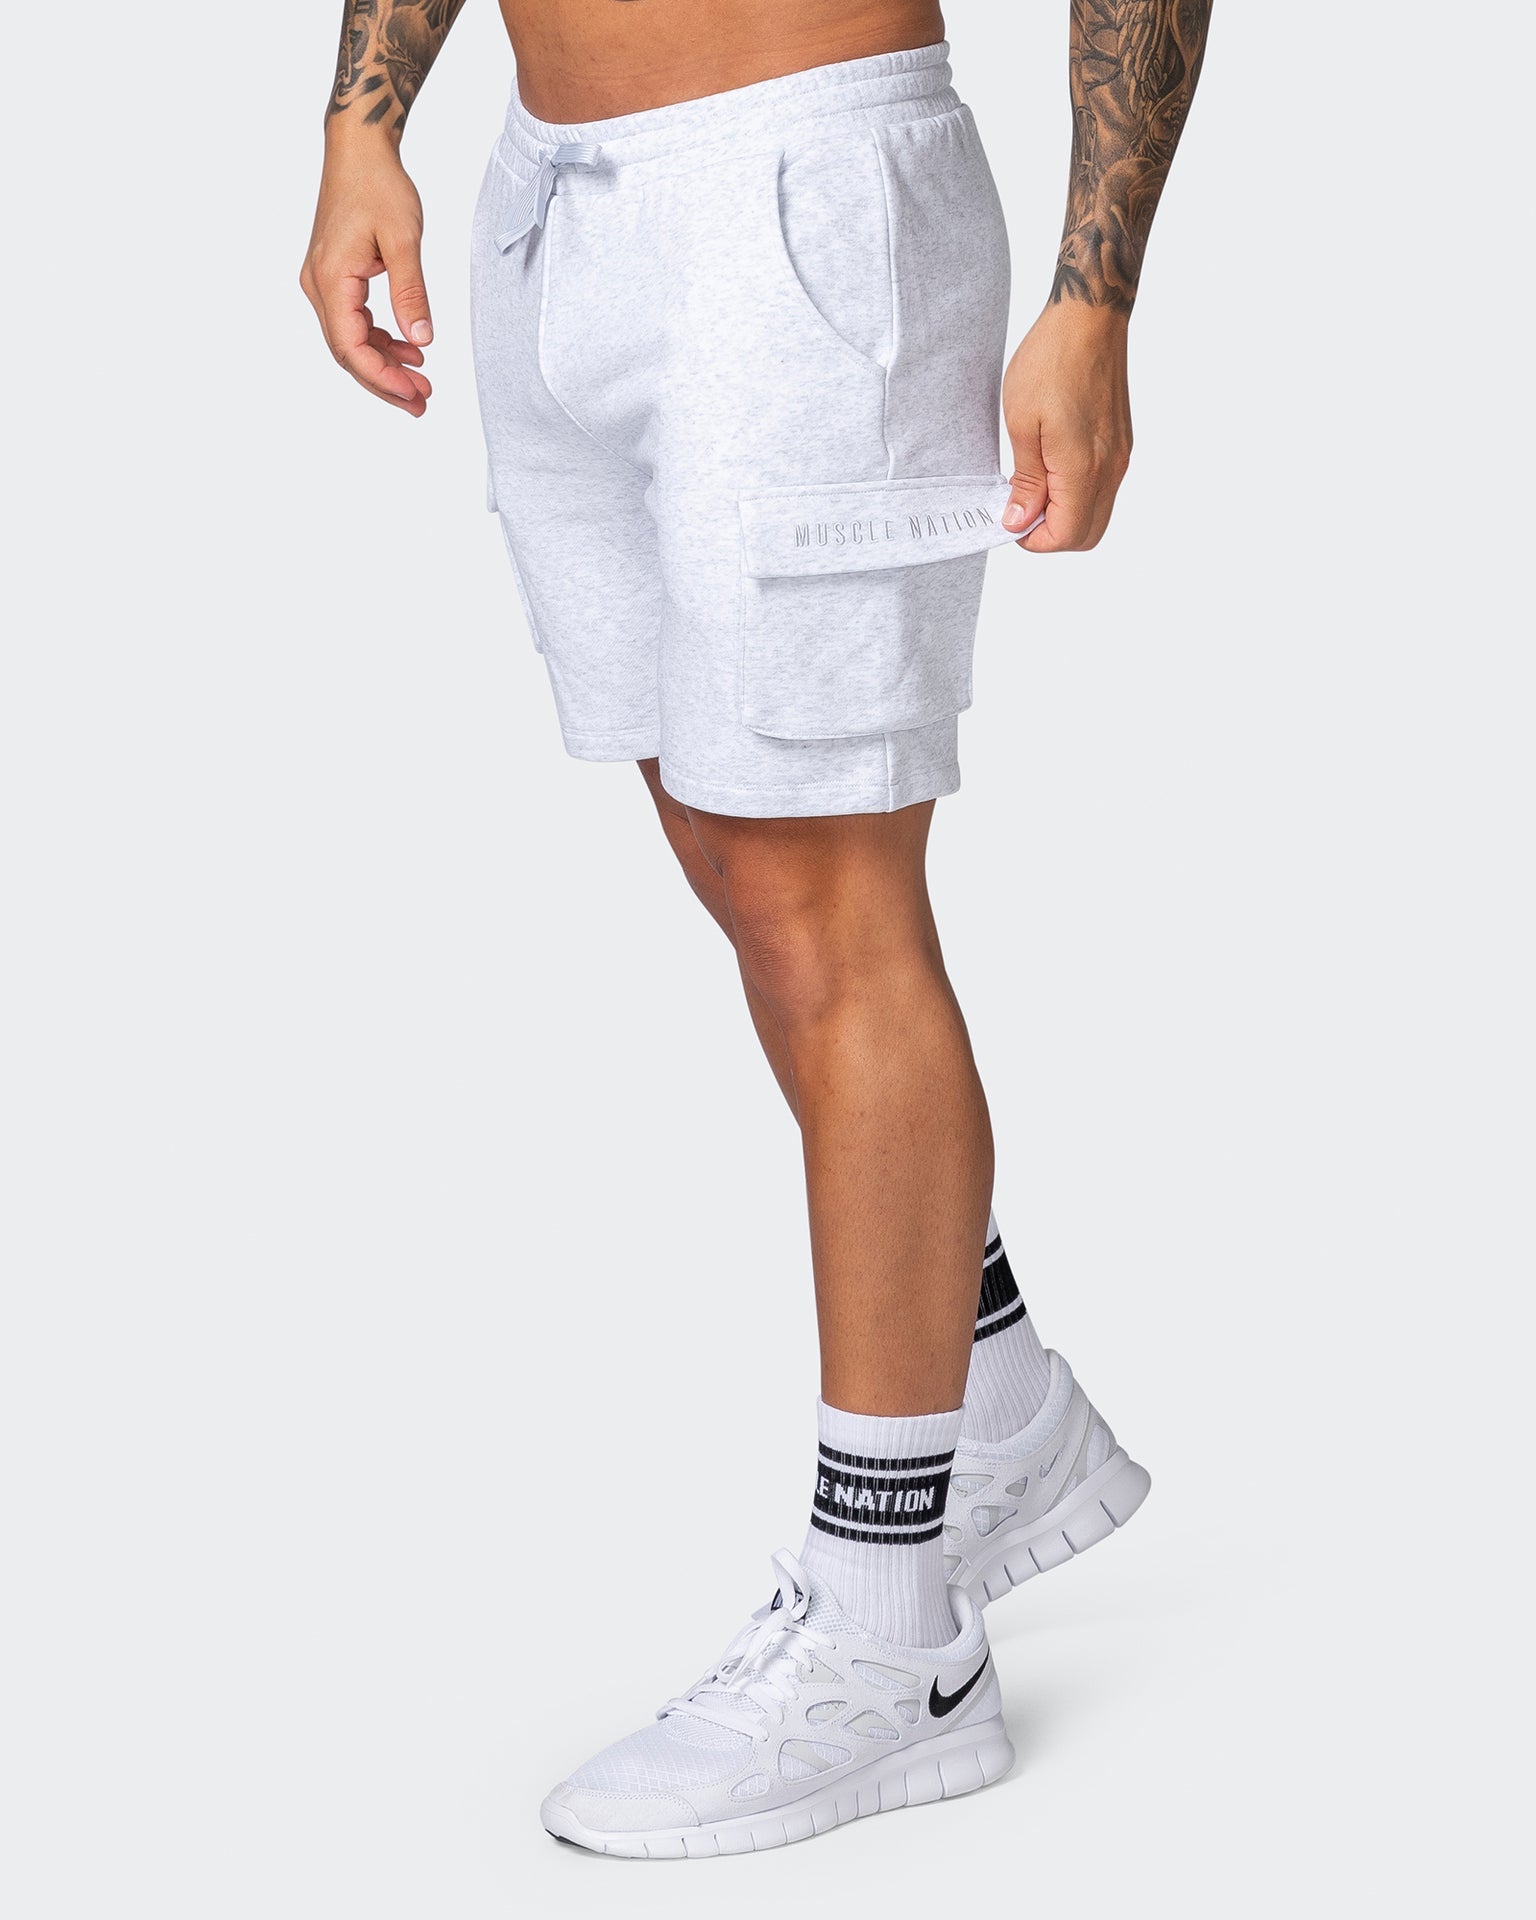 musclenation Activewear Cargo Shorts - White Marl